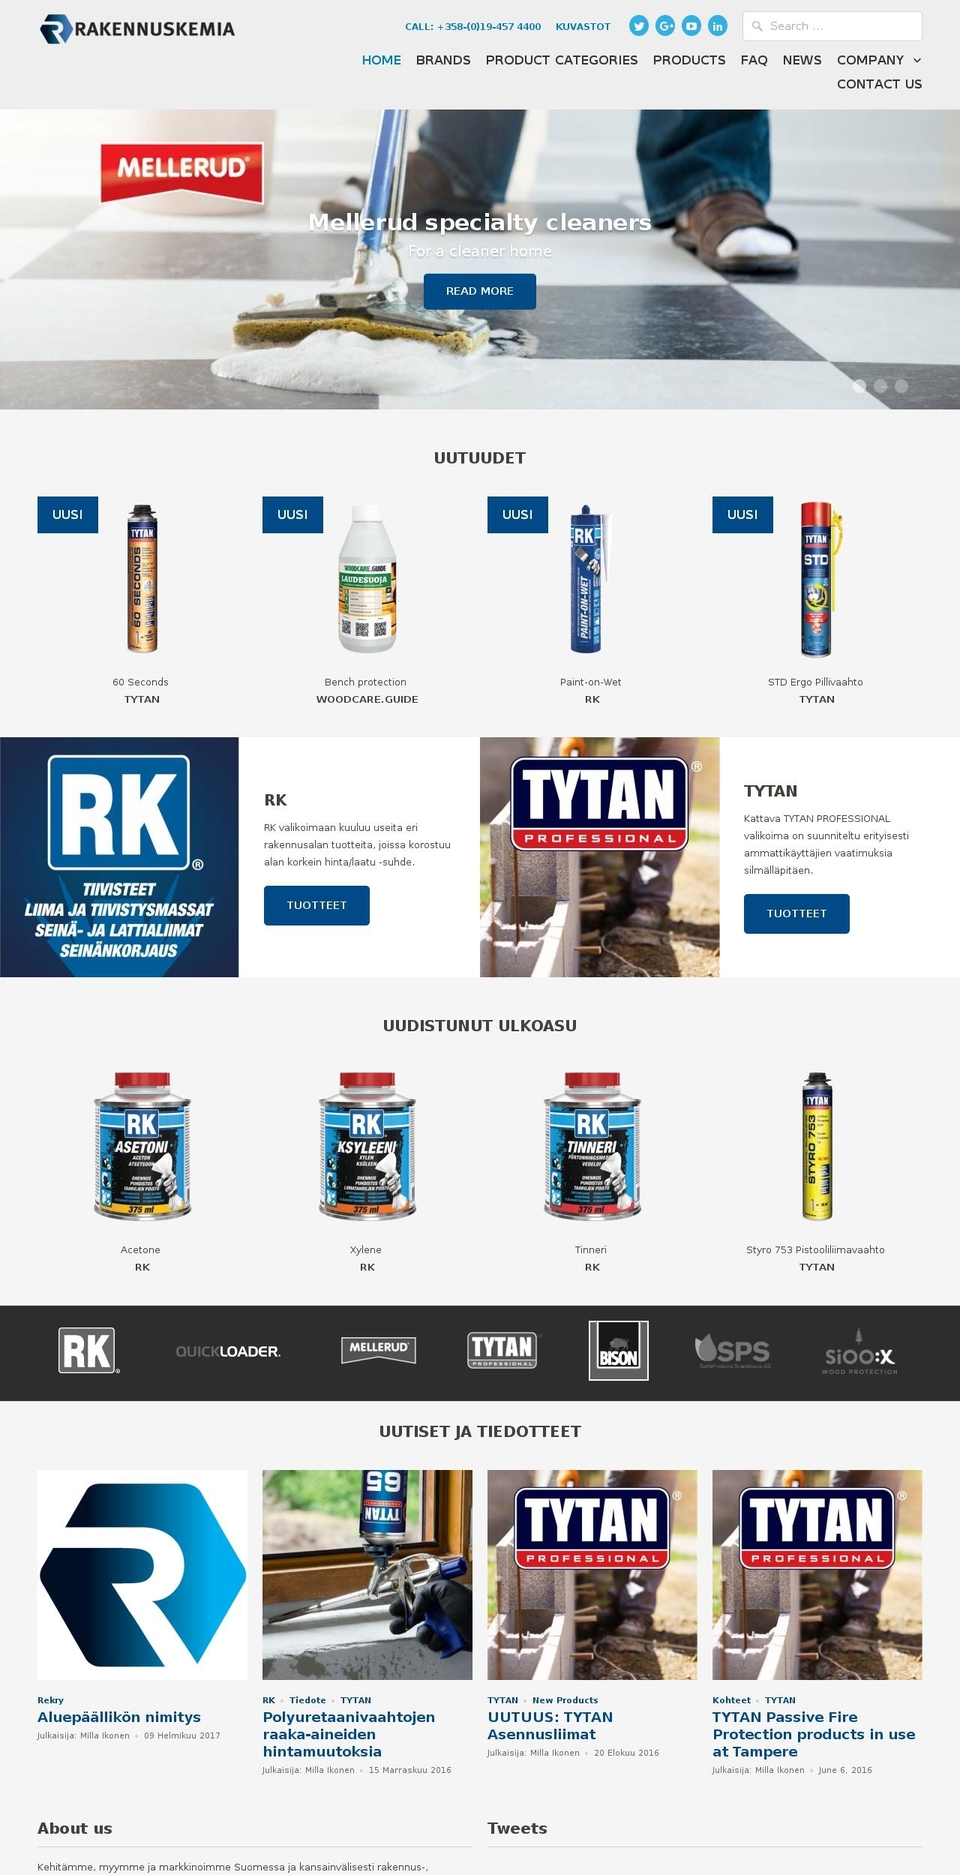 rakennuskemia.com shopify website screenshot